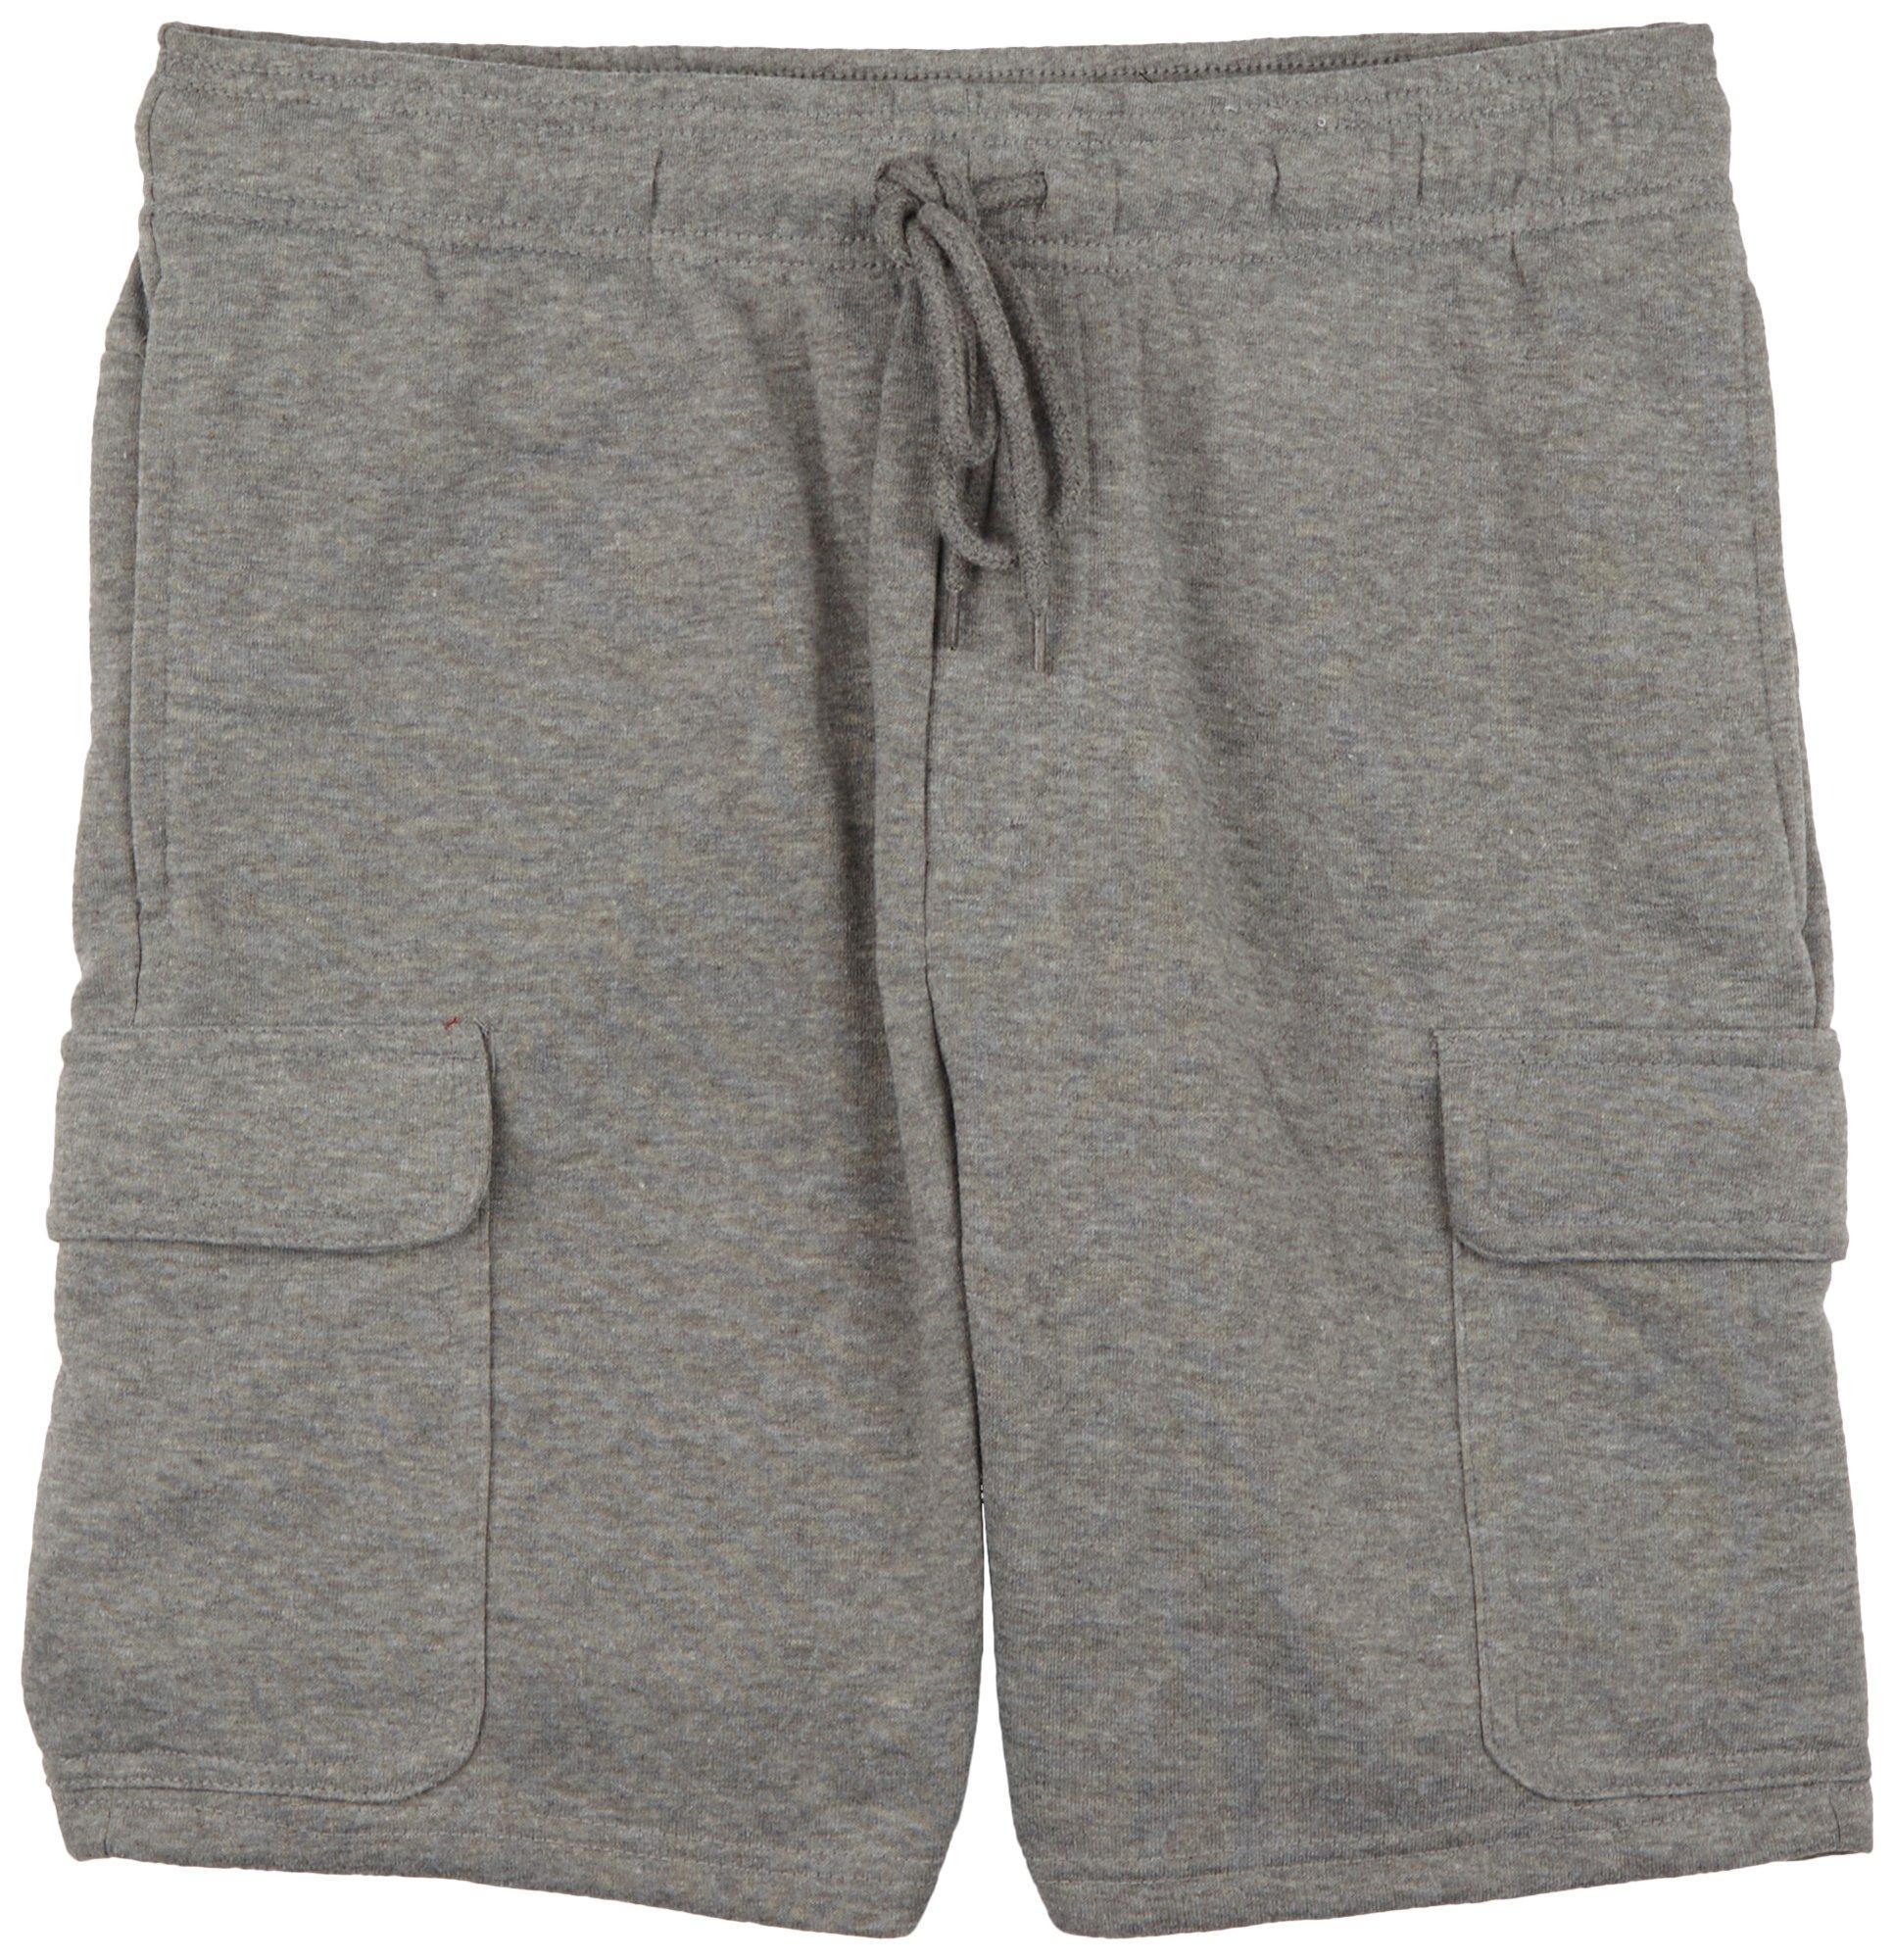 BROOKLYN CLOTH Mens 7 in. Cargo Fleece Shorts